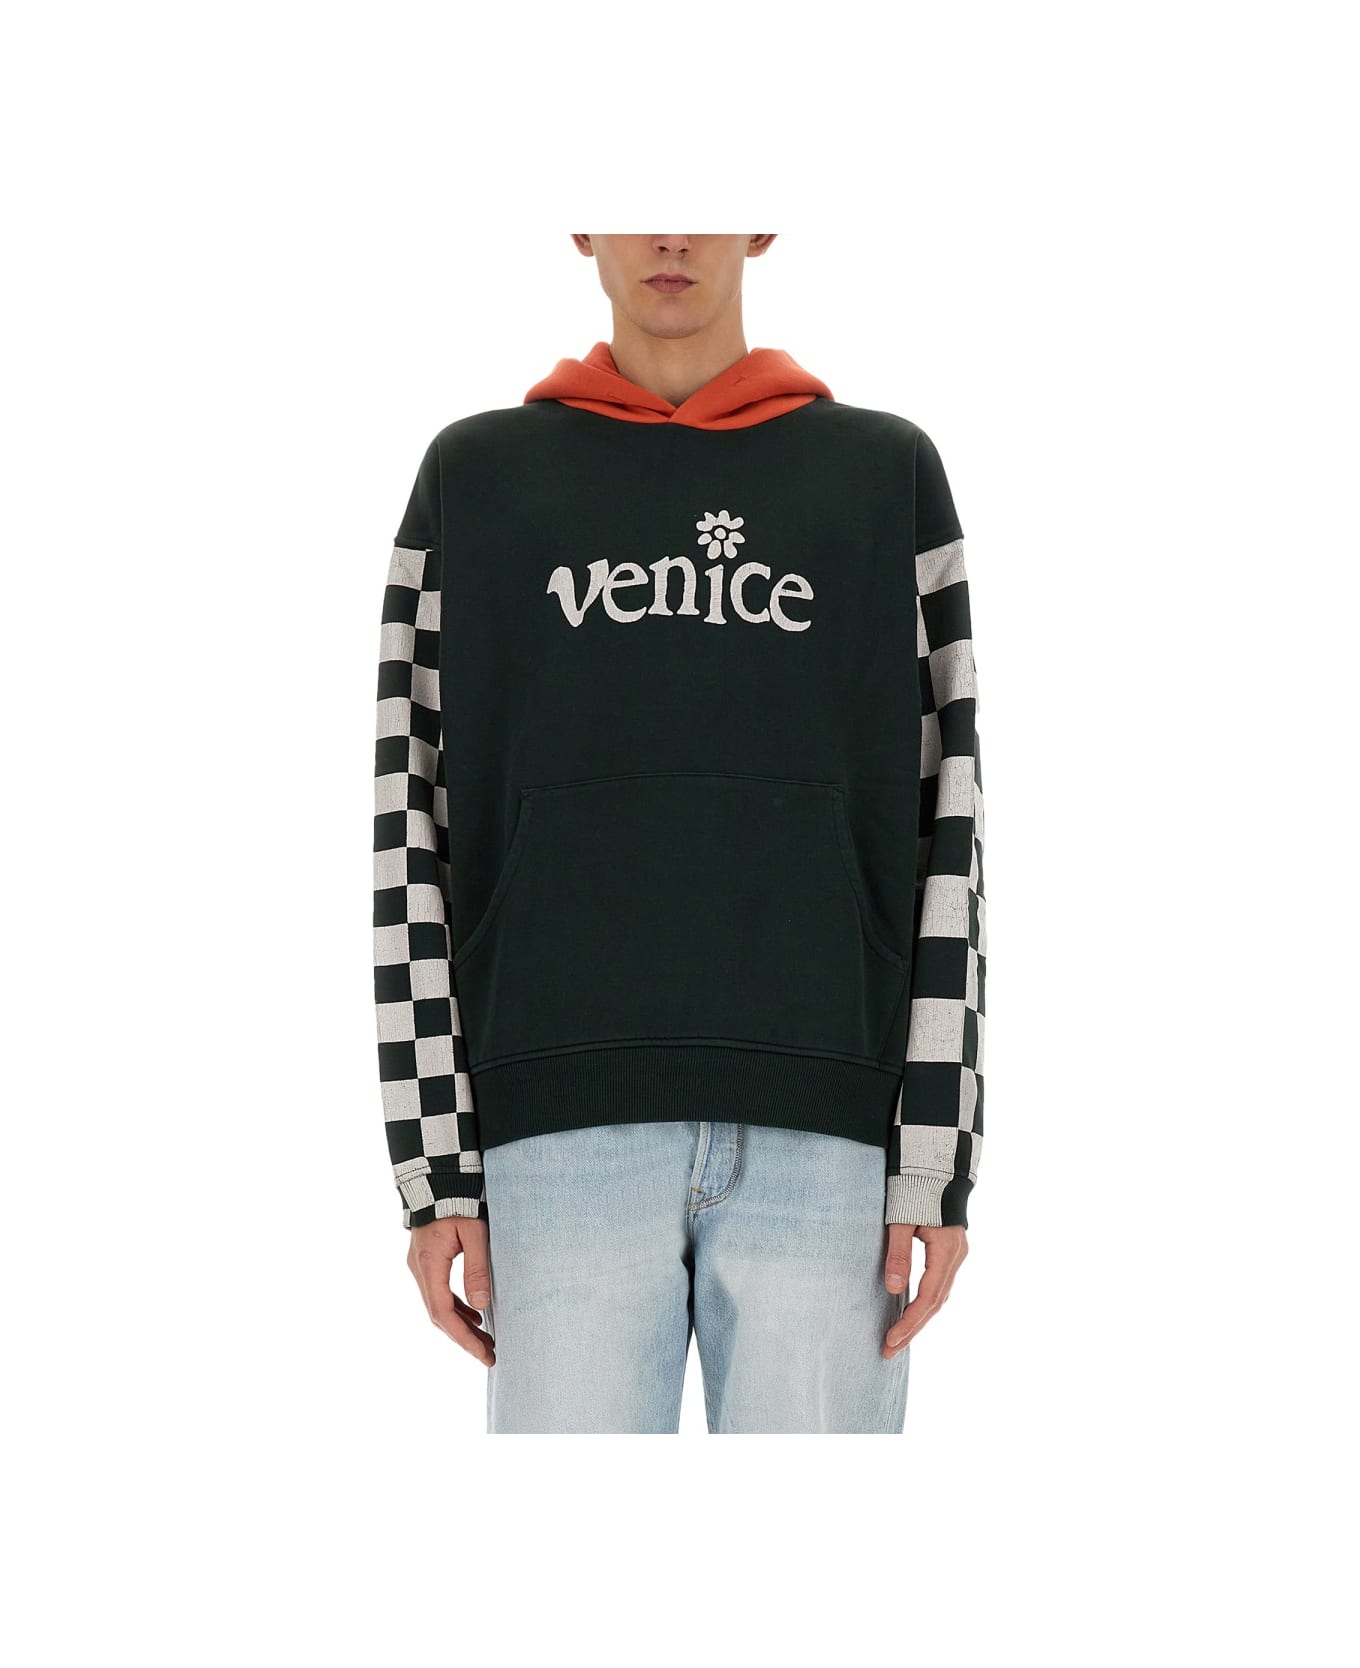 ERL "venice" Sweatshirt - BLACK